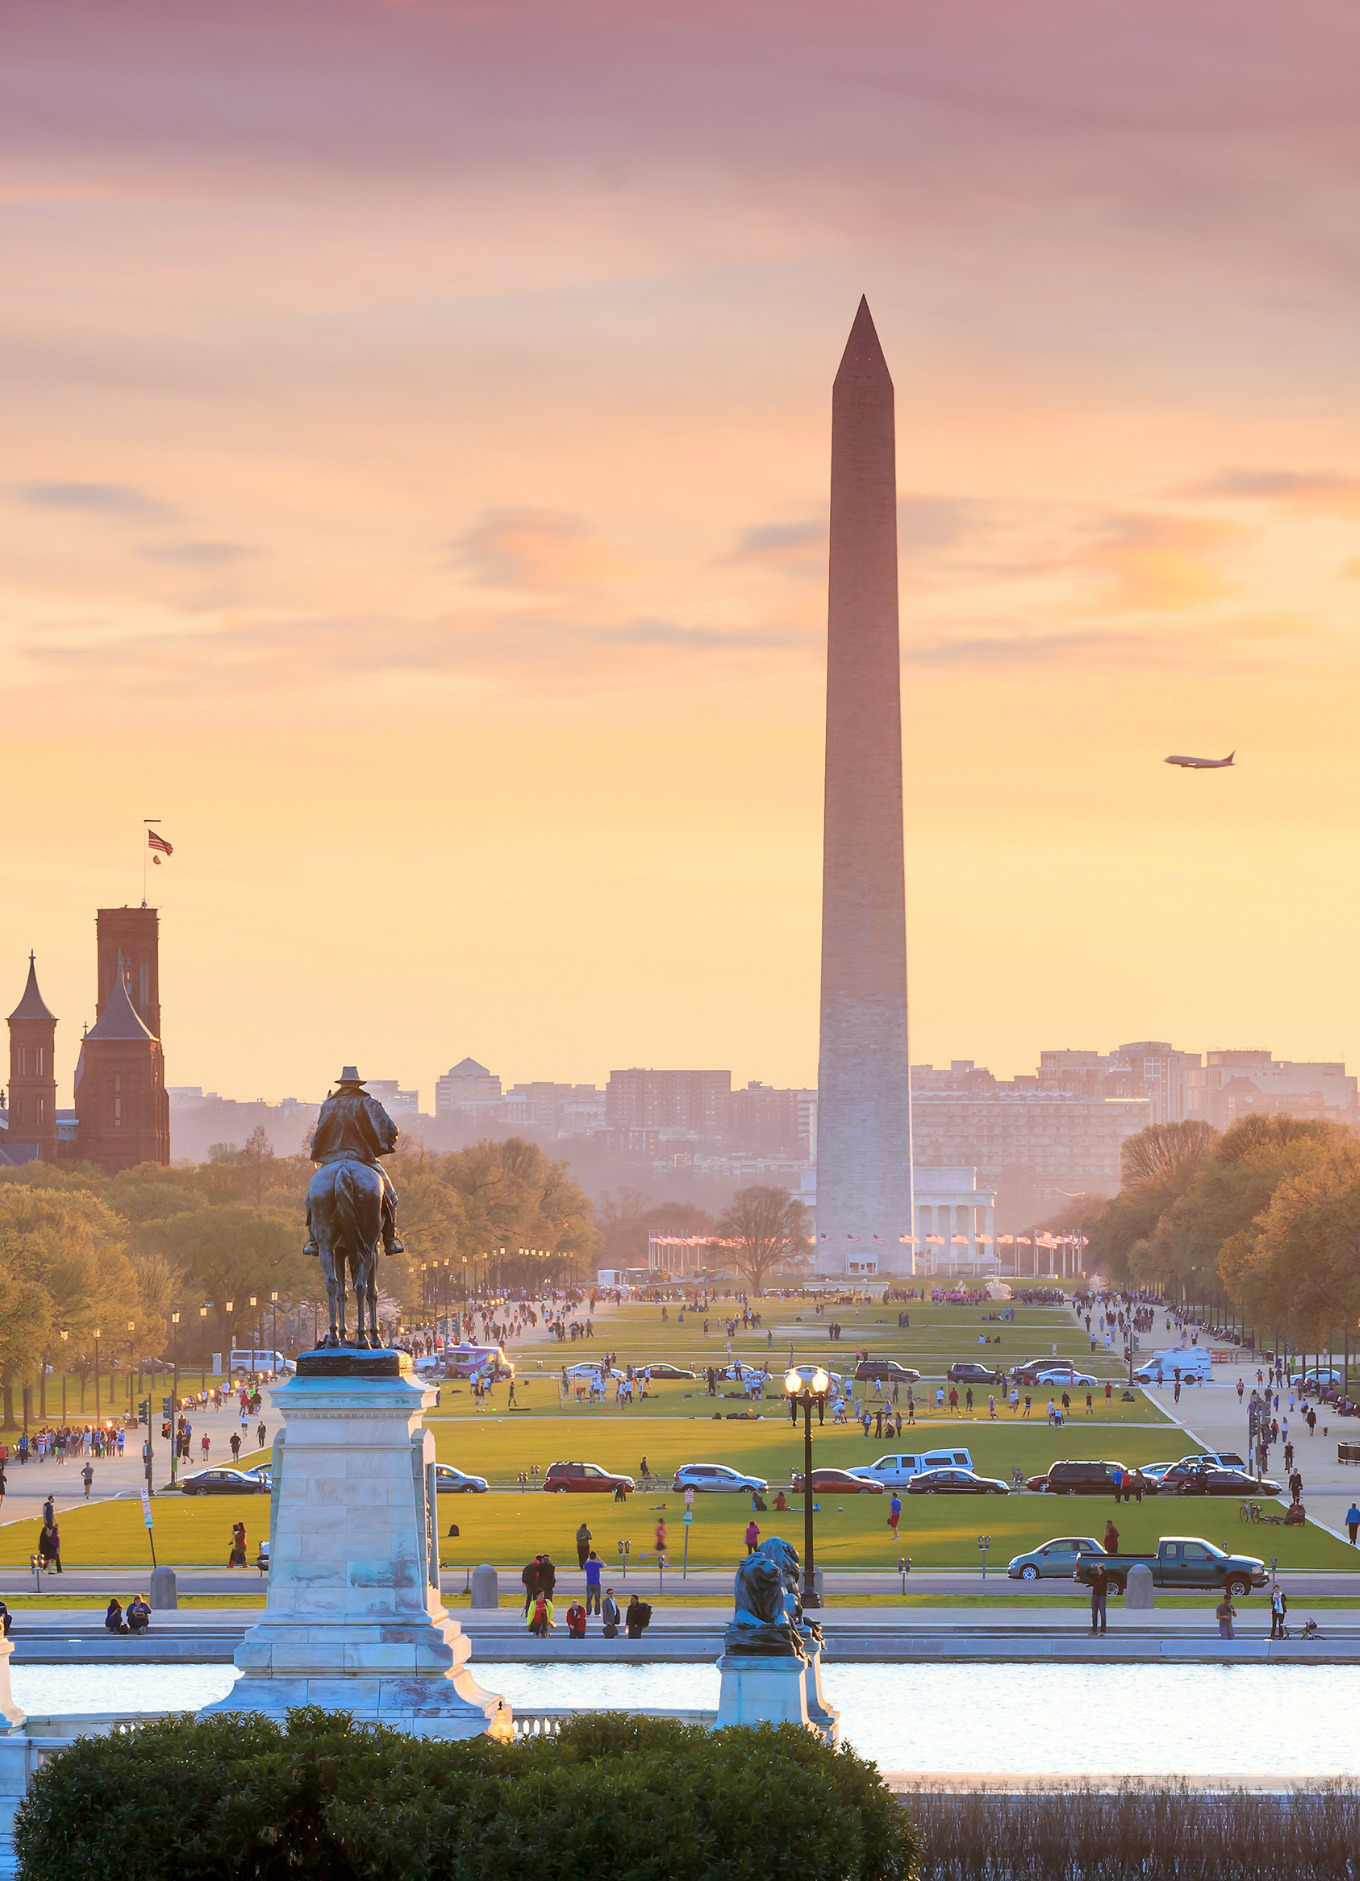 Sunset view of the Washington Monument in Washington DC